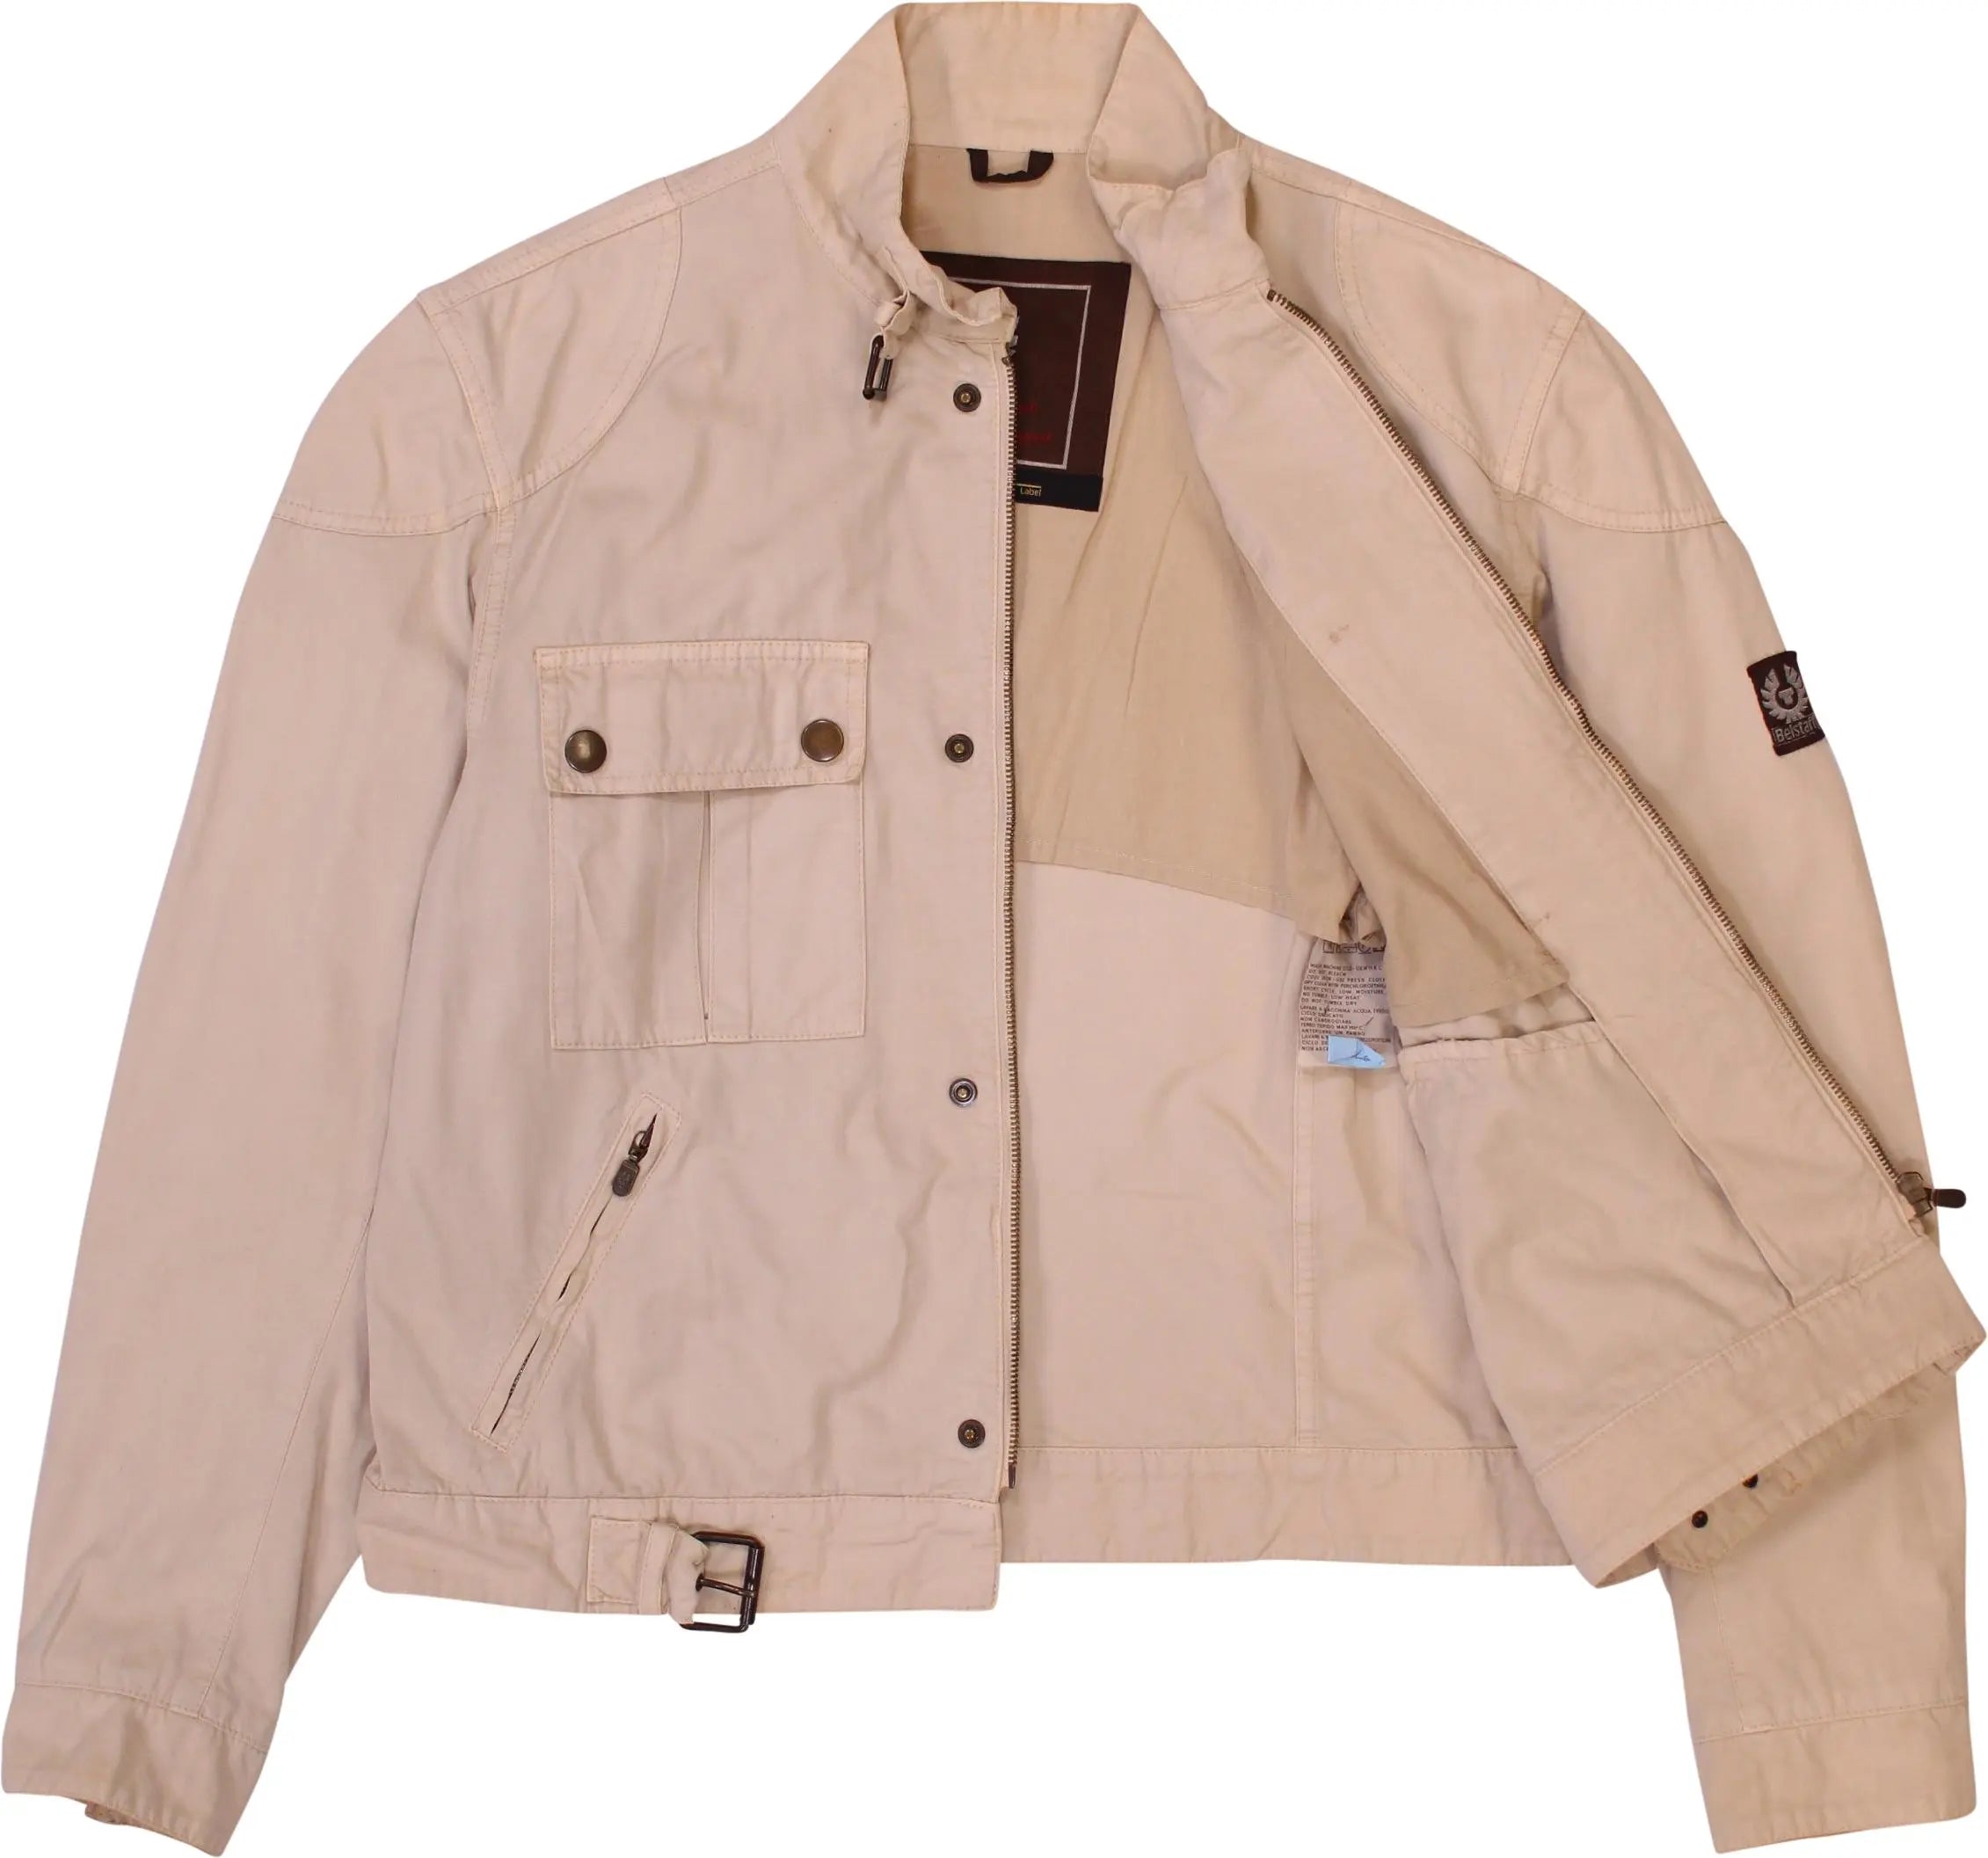 Belstaff - Summer Jacket by Belstaff- ThriftTale.com - Vintage and second handclothing